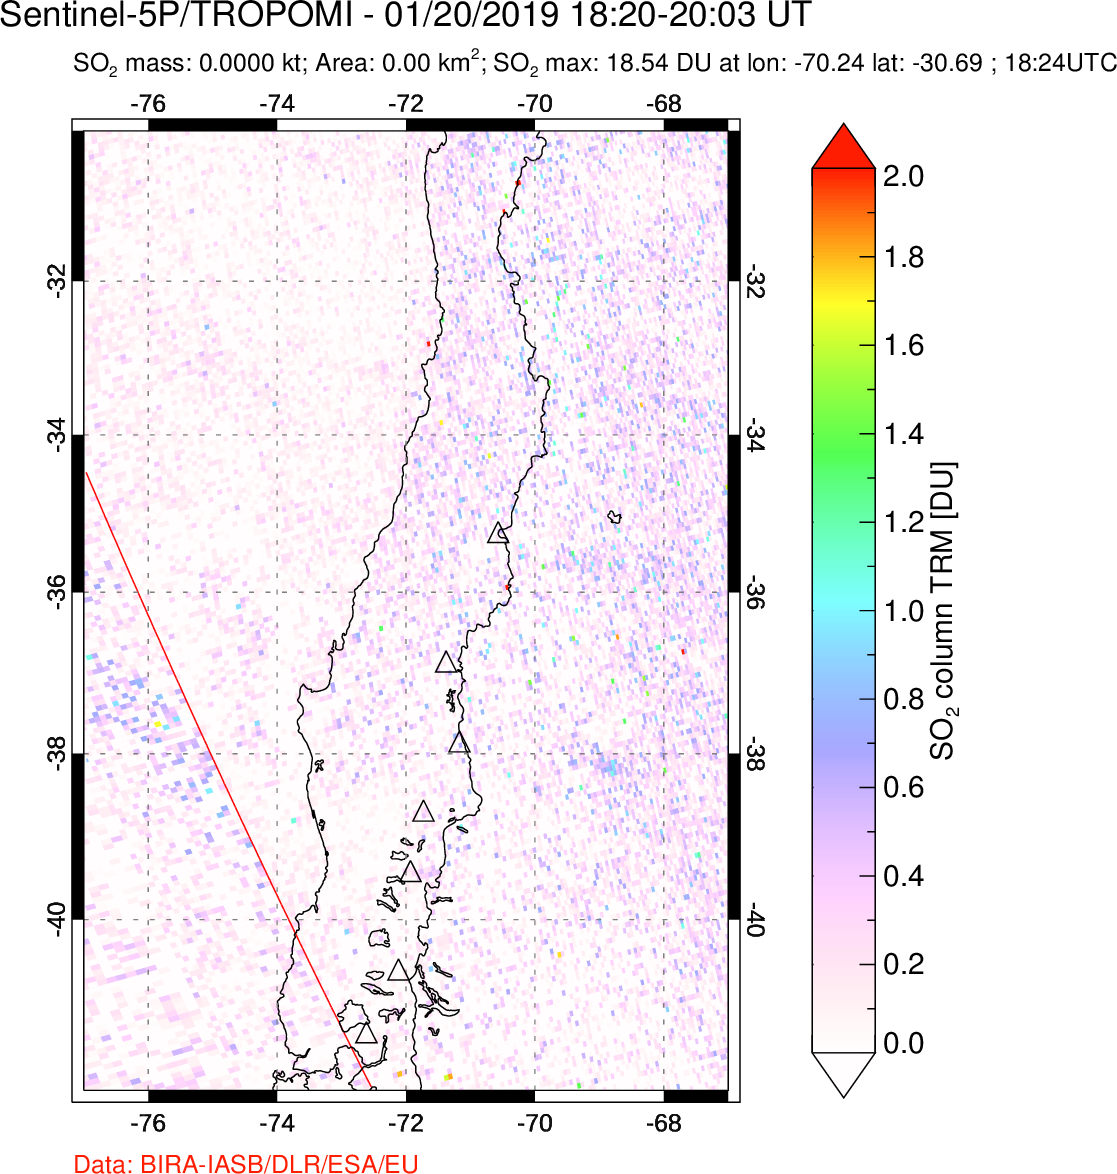 A sulfur dioxide image over Central Chile on Jan 20, 2019.